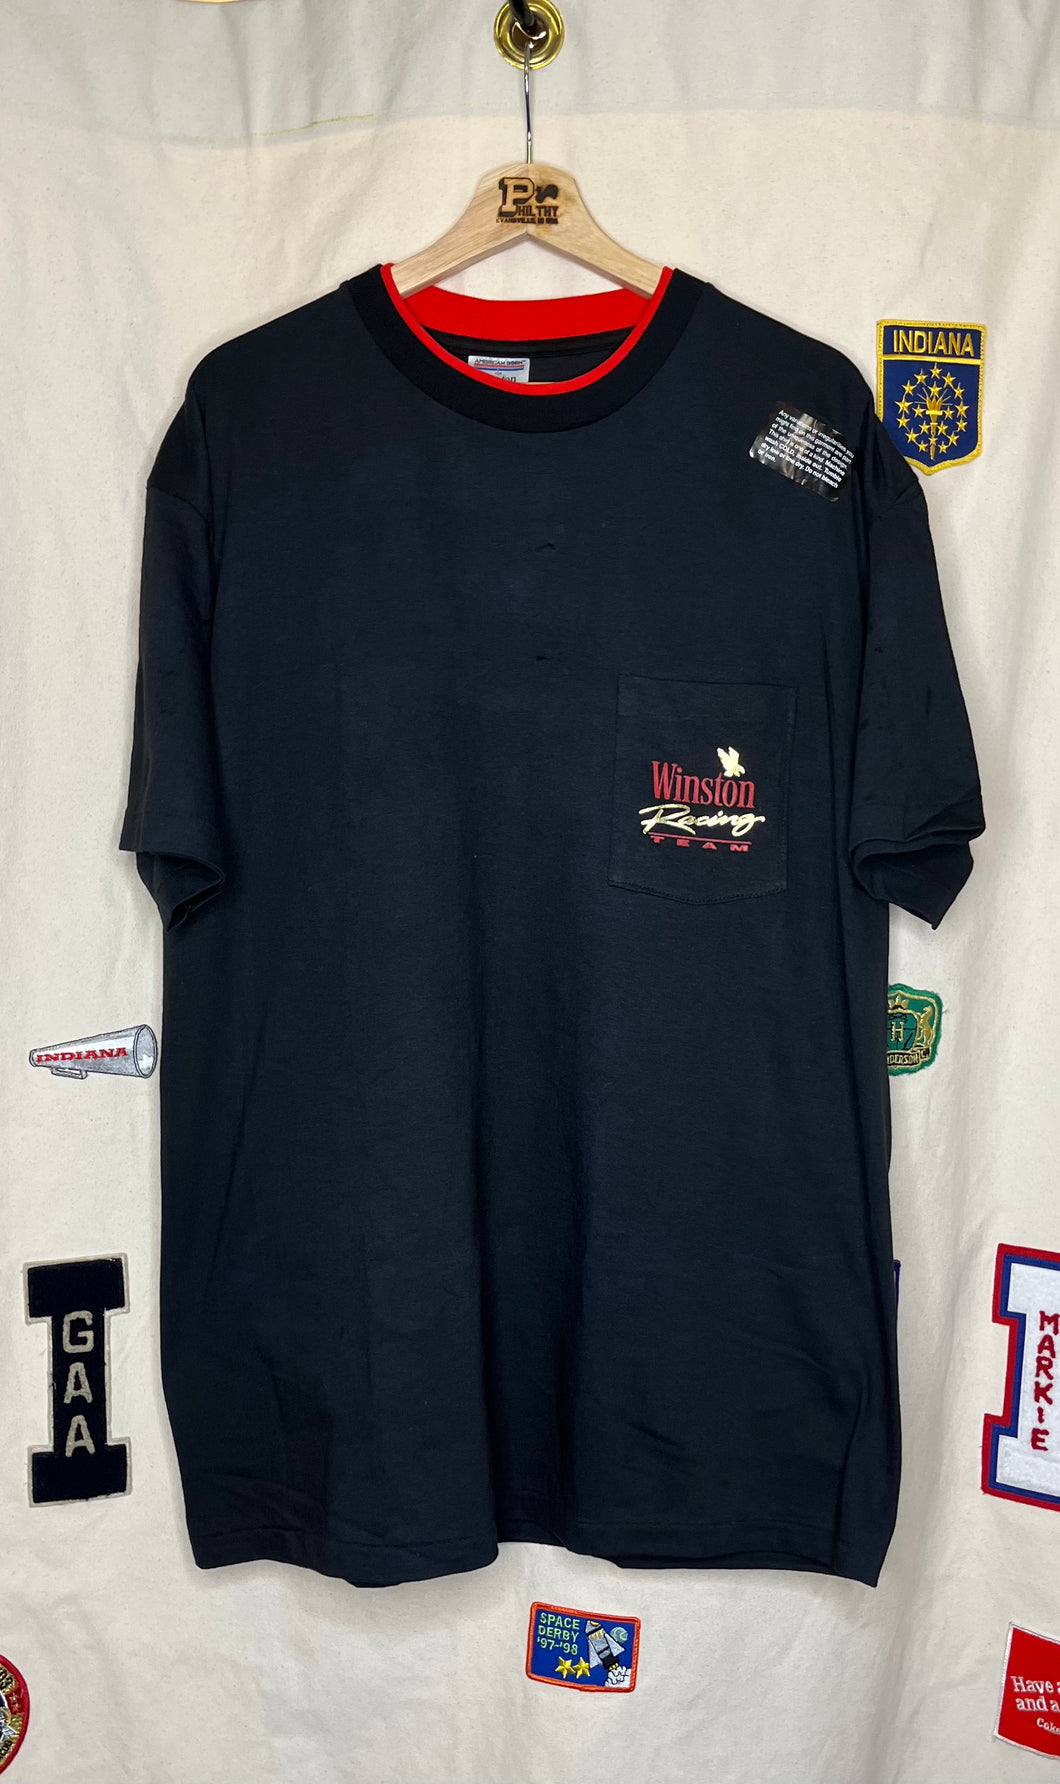 Winston Racing Tobacco T-Shirt: XL